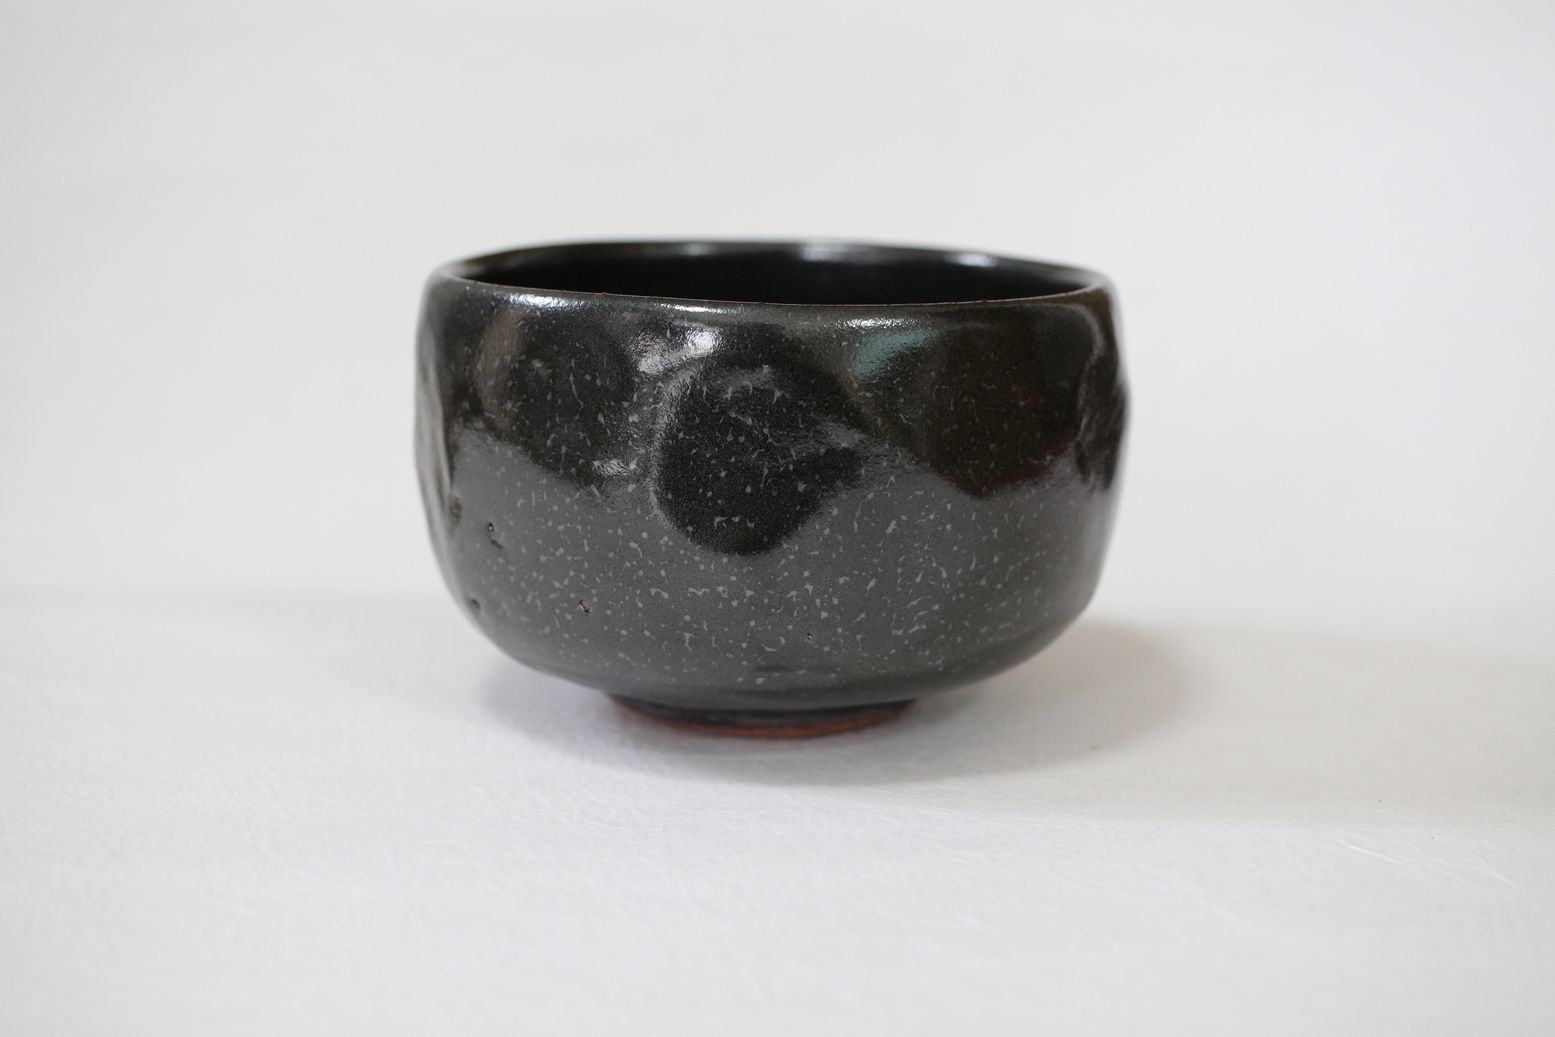 Authentic Japanese Traditional Tea Ceremony Ippuku 3.75 Diameter Mini Matcha Bowl Chawan Mino Tea Cup Textured Glaze Floral Design Handcrafted in Japan Botan Peony